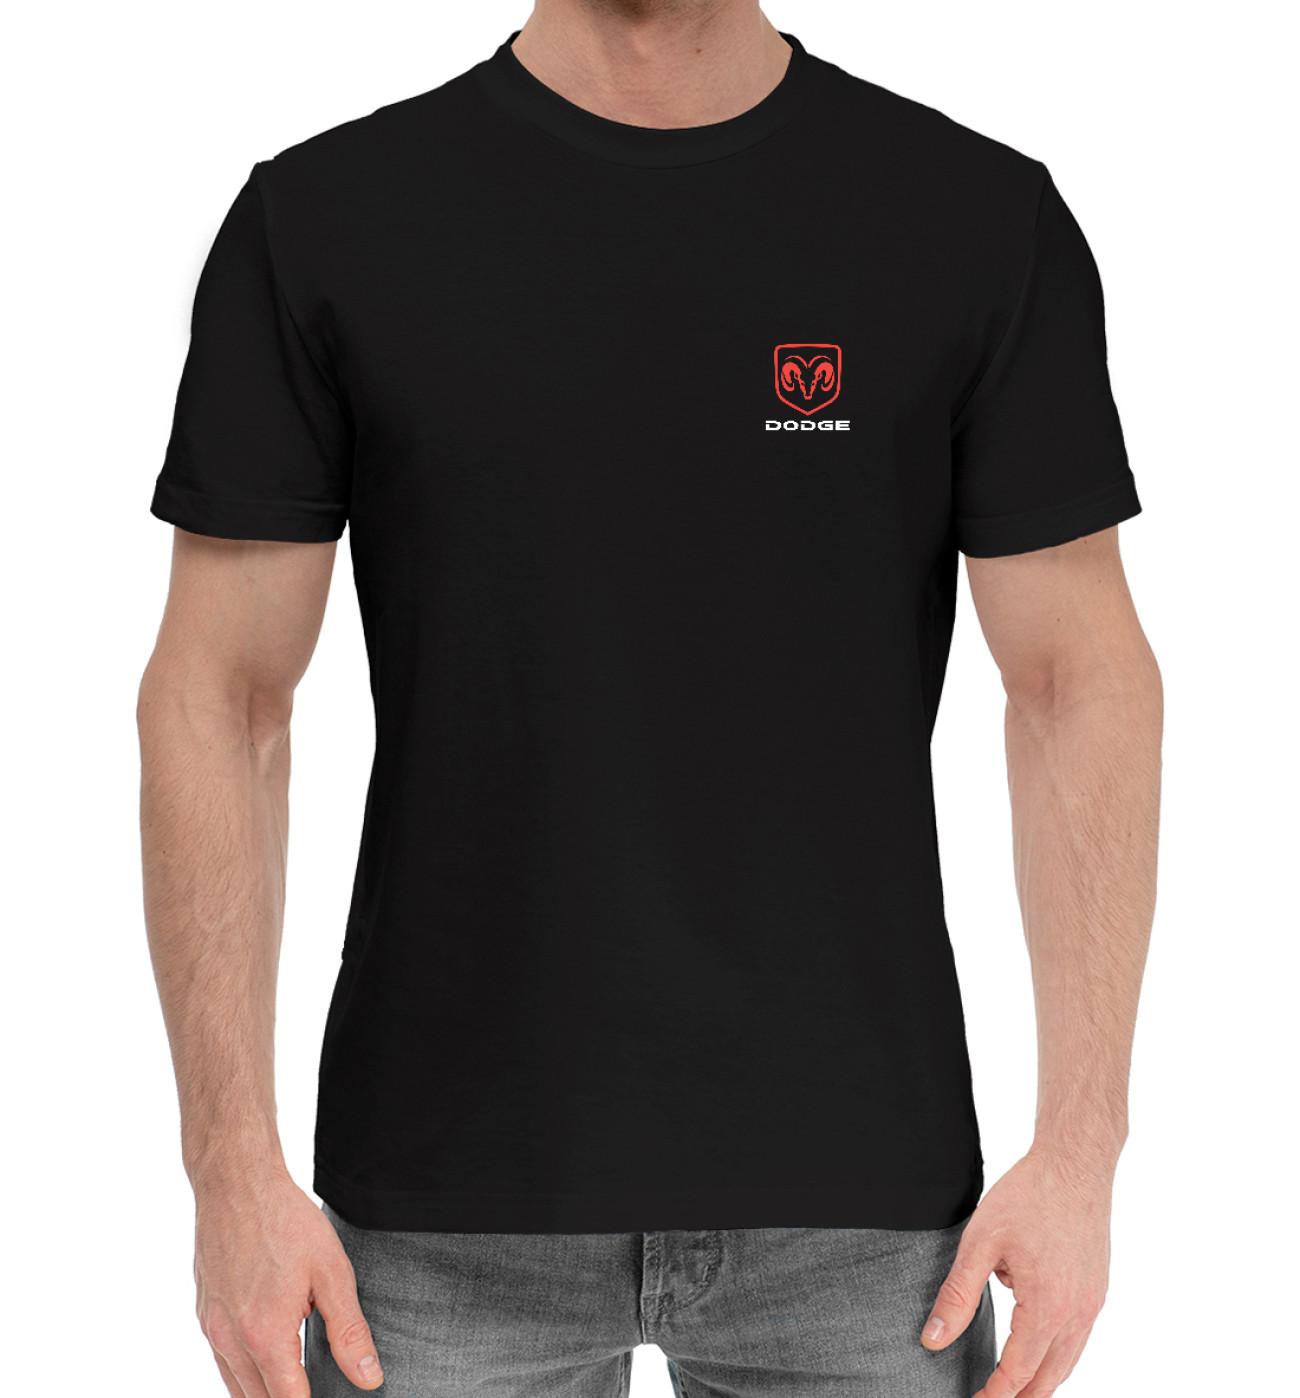 Мужская Хлопковая футболка DODGE, артикул: AMP-415032-hfu-2